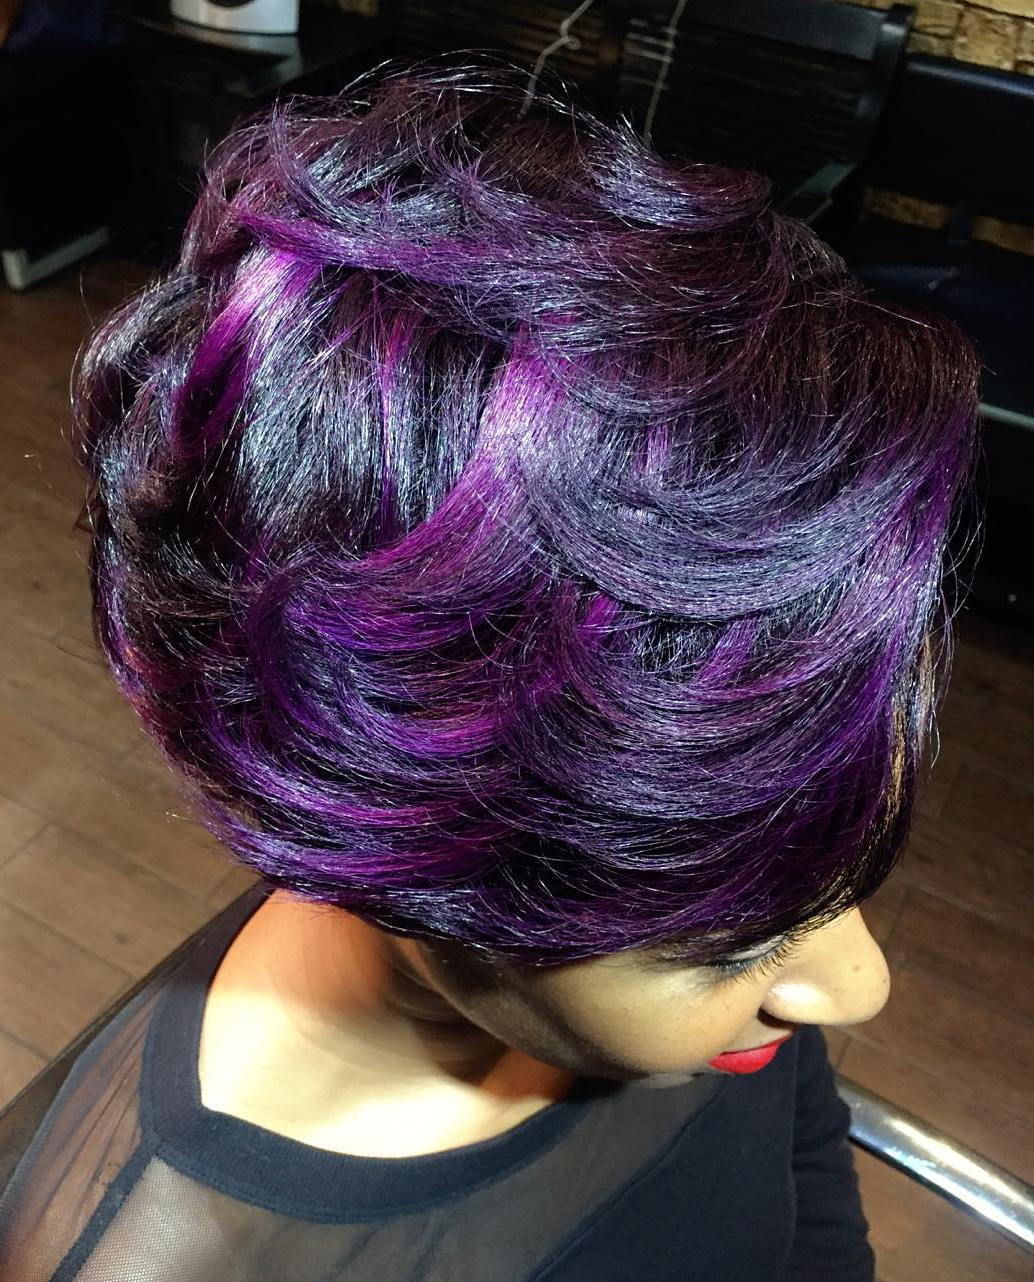 Negru Hair With Purple Highlights